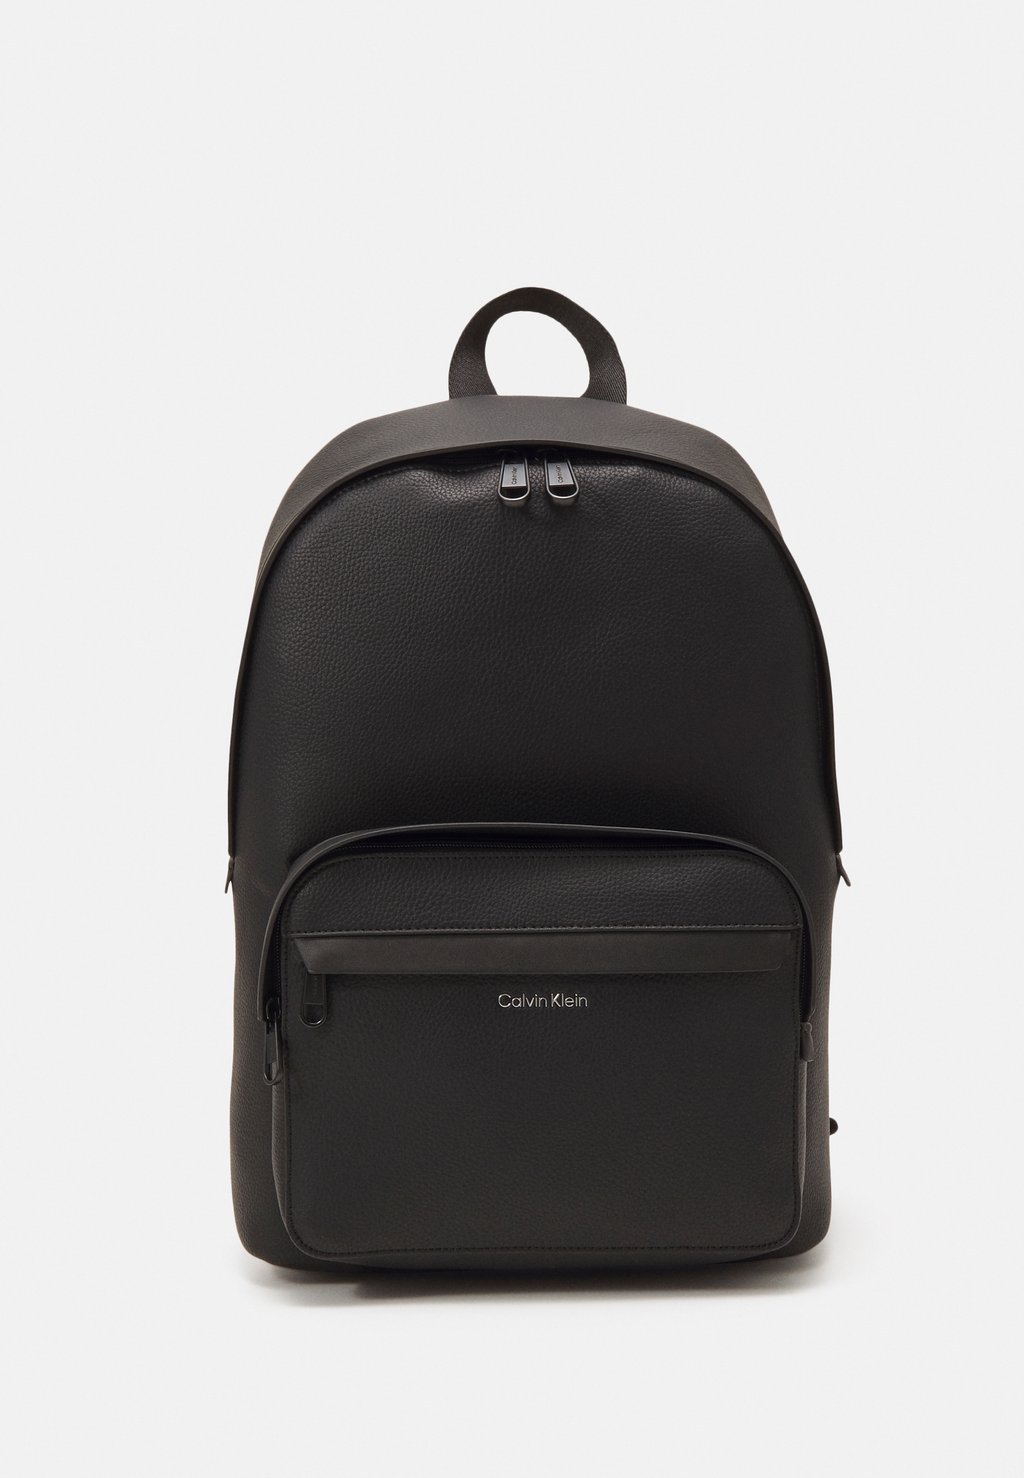 Рюкзак MUST CAMPUS UNISEX Calvin Klein, цвет black pebble рюкзак must campus mono unisex calvin klein цвет classic mono black